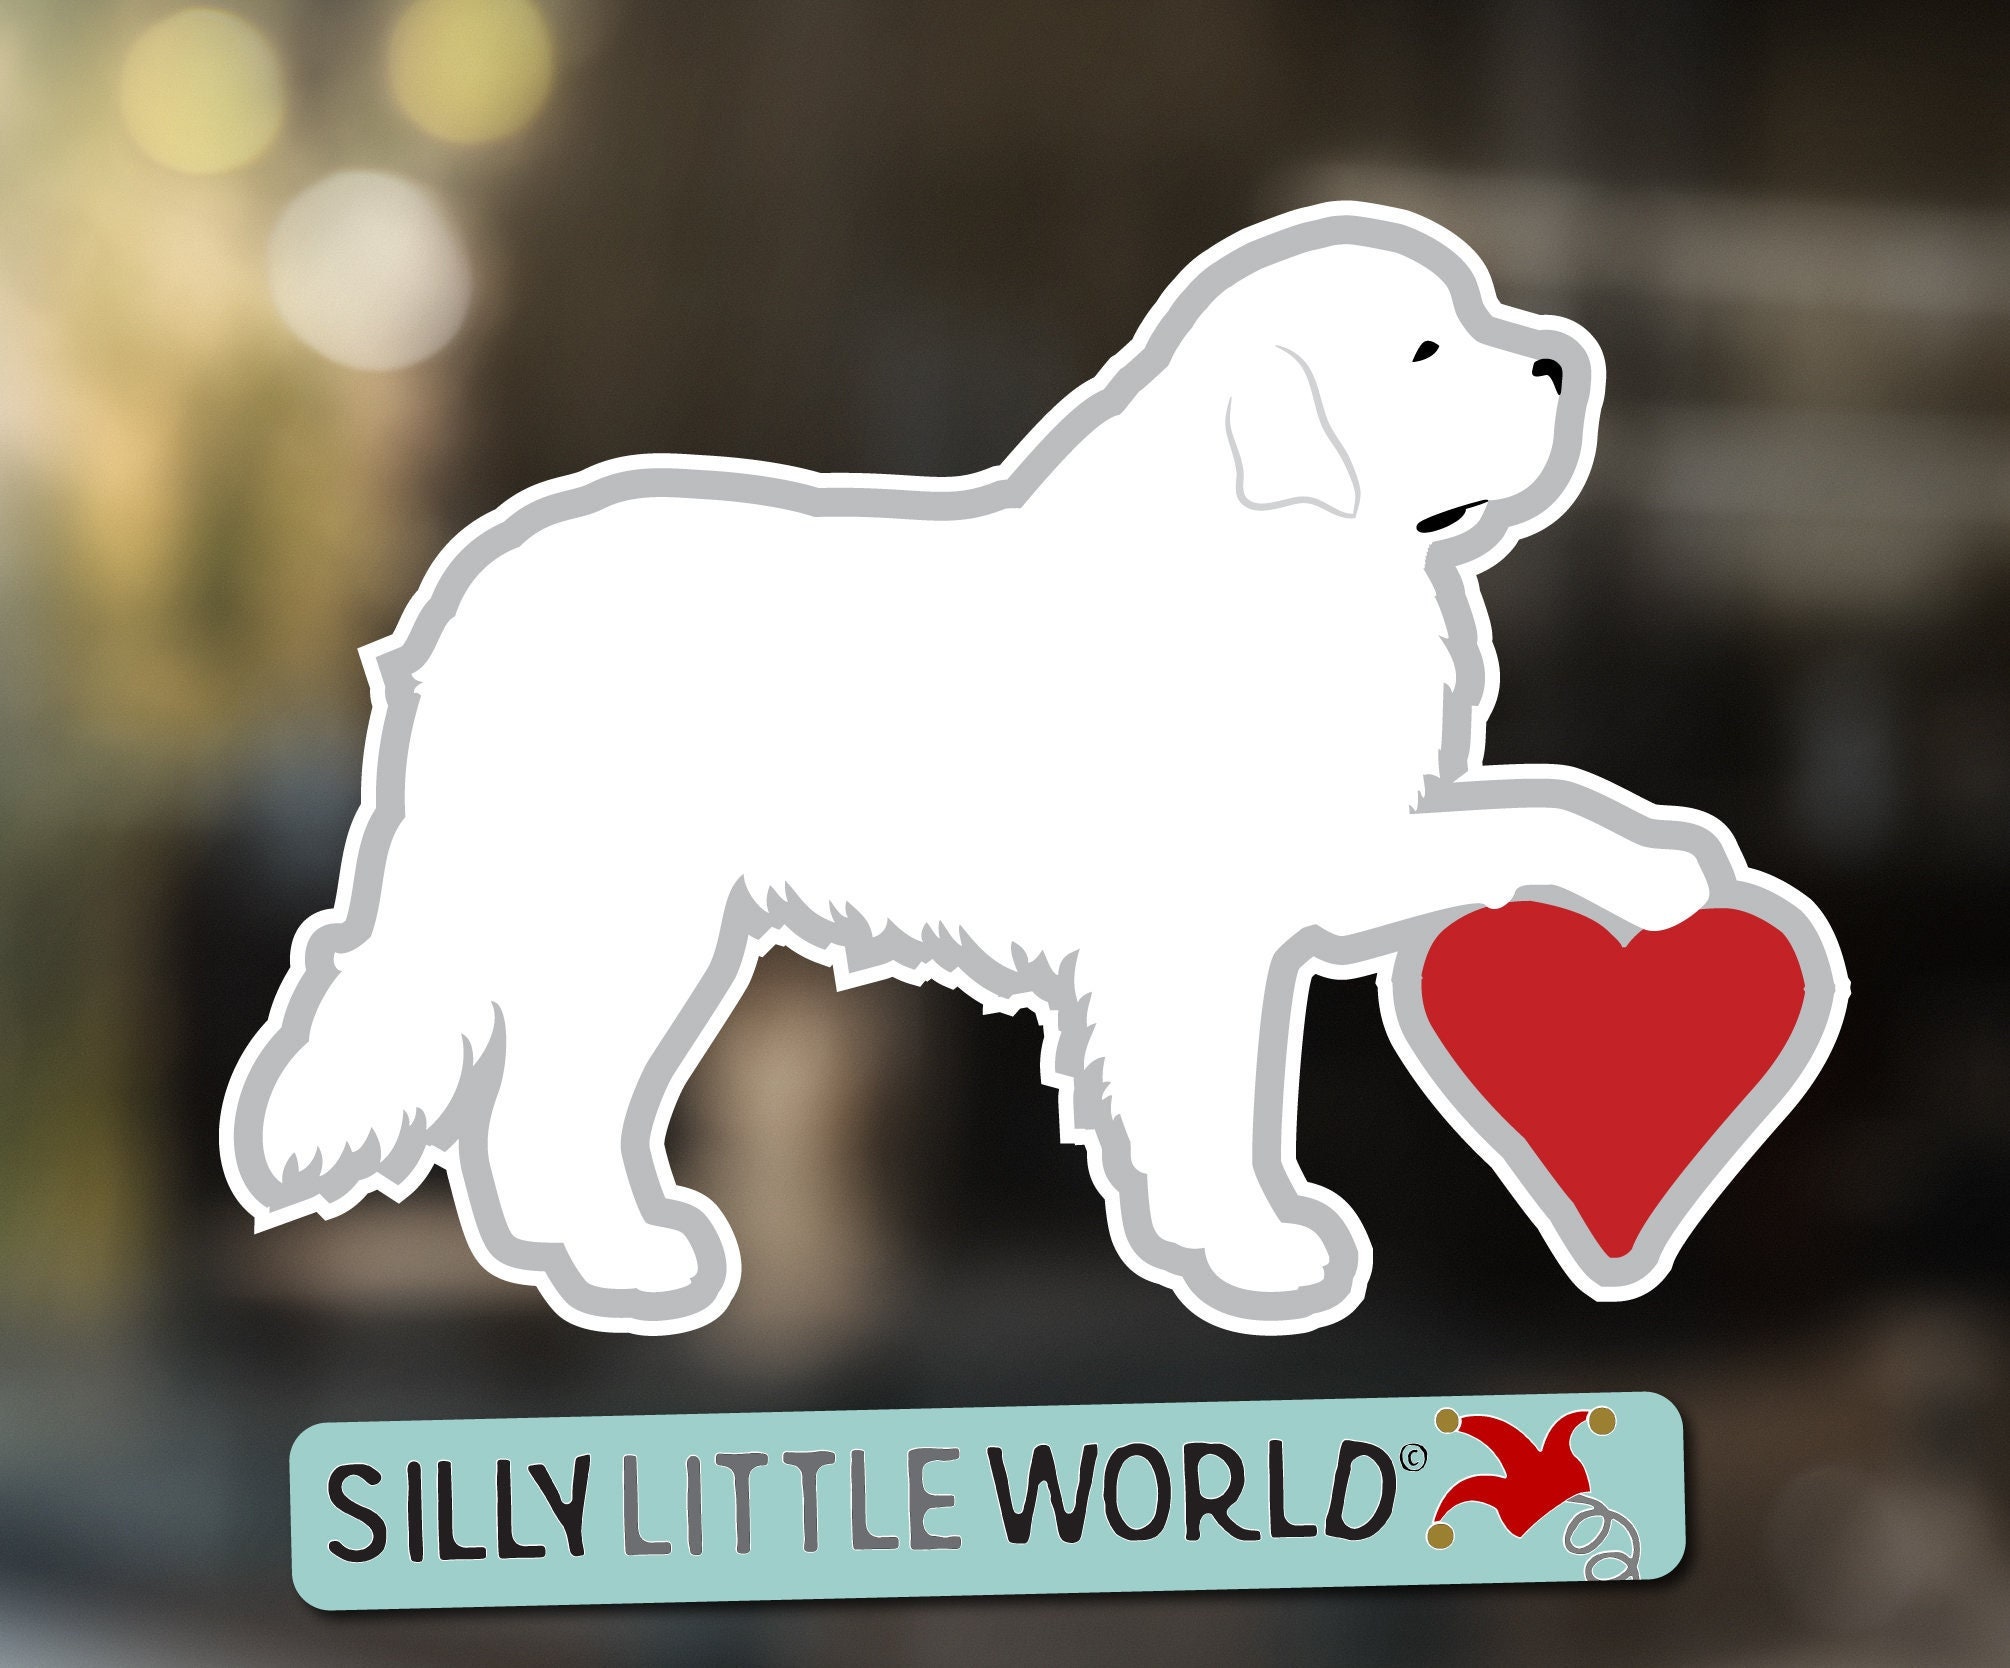 Tee-shirt chien Great Pyrenees de maman - mignon et positif Animal Lover  cadeau